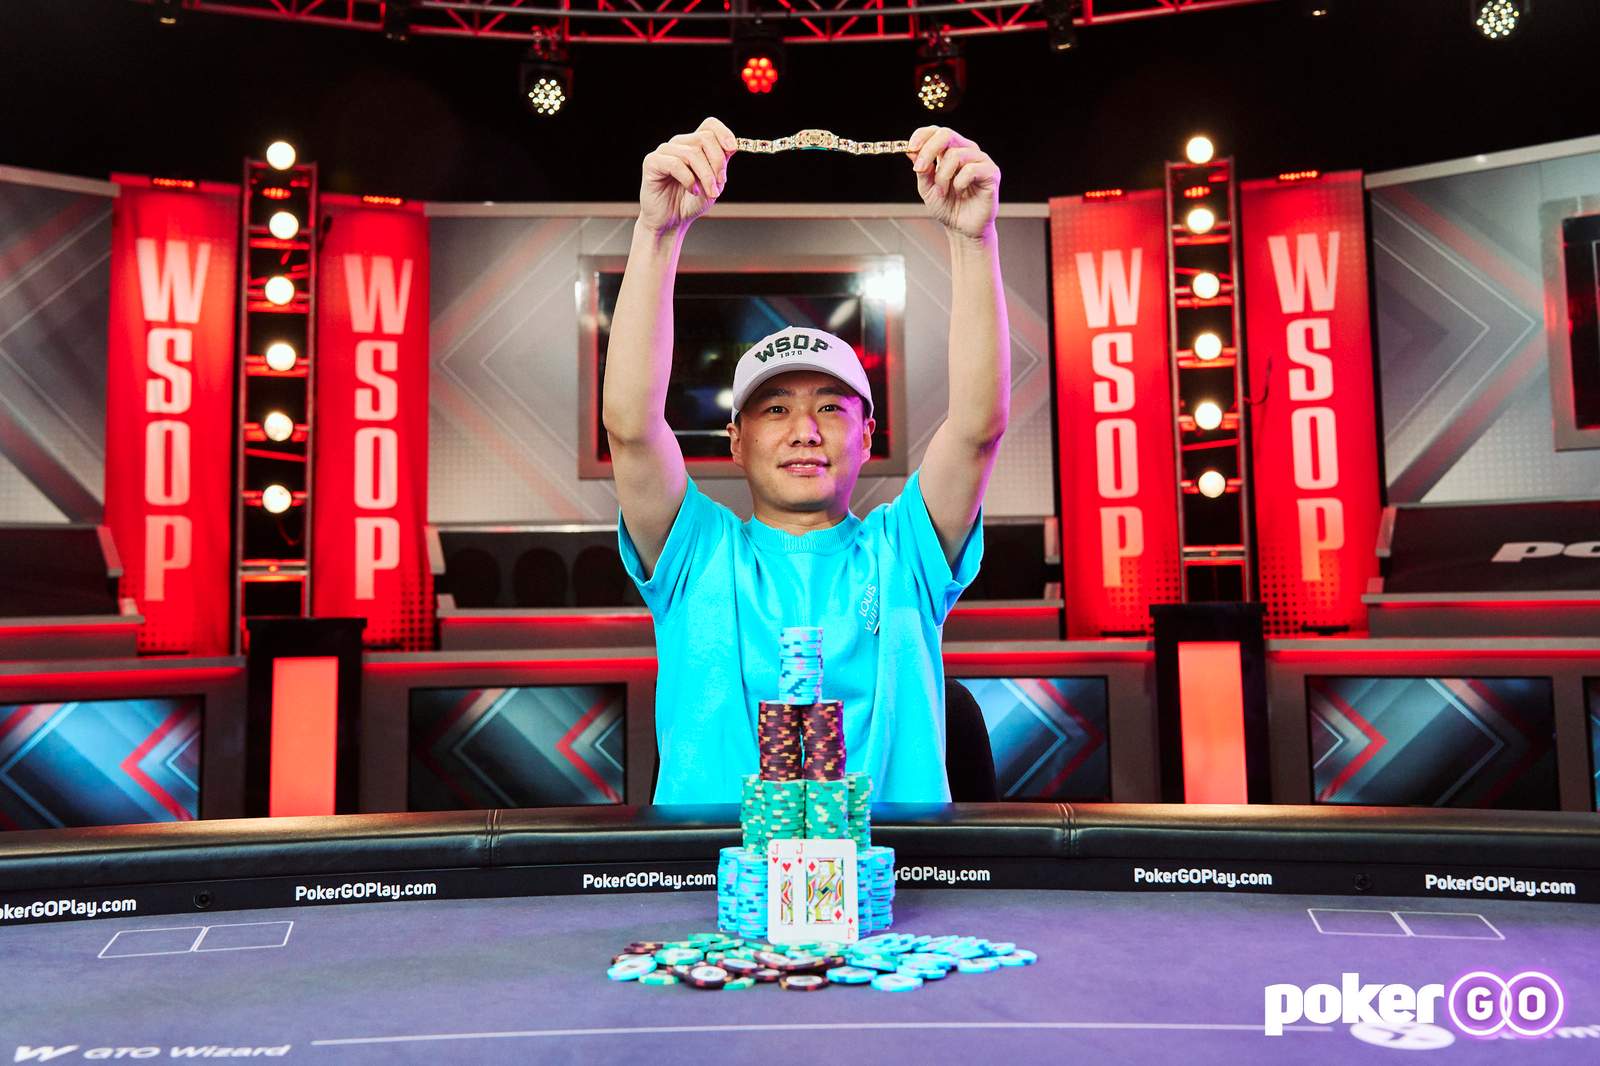 Yuan Li Wins First WSOP Bracelet in $2K No-Limit Hold'em